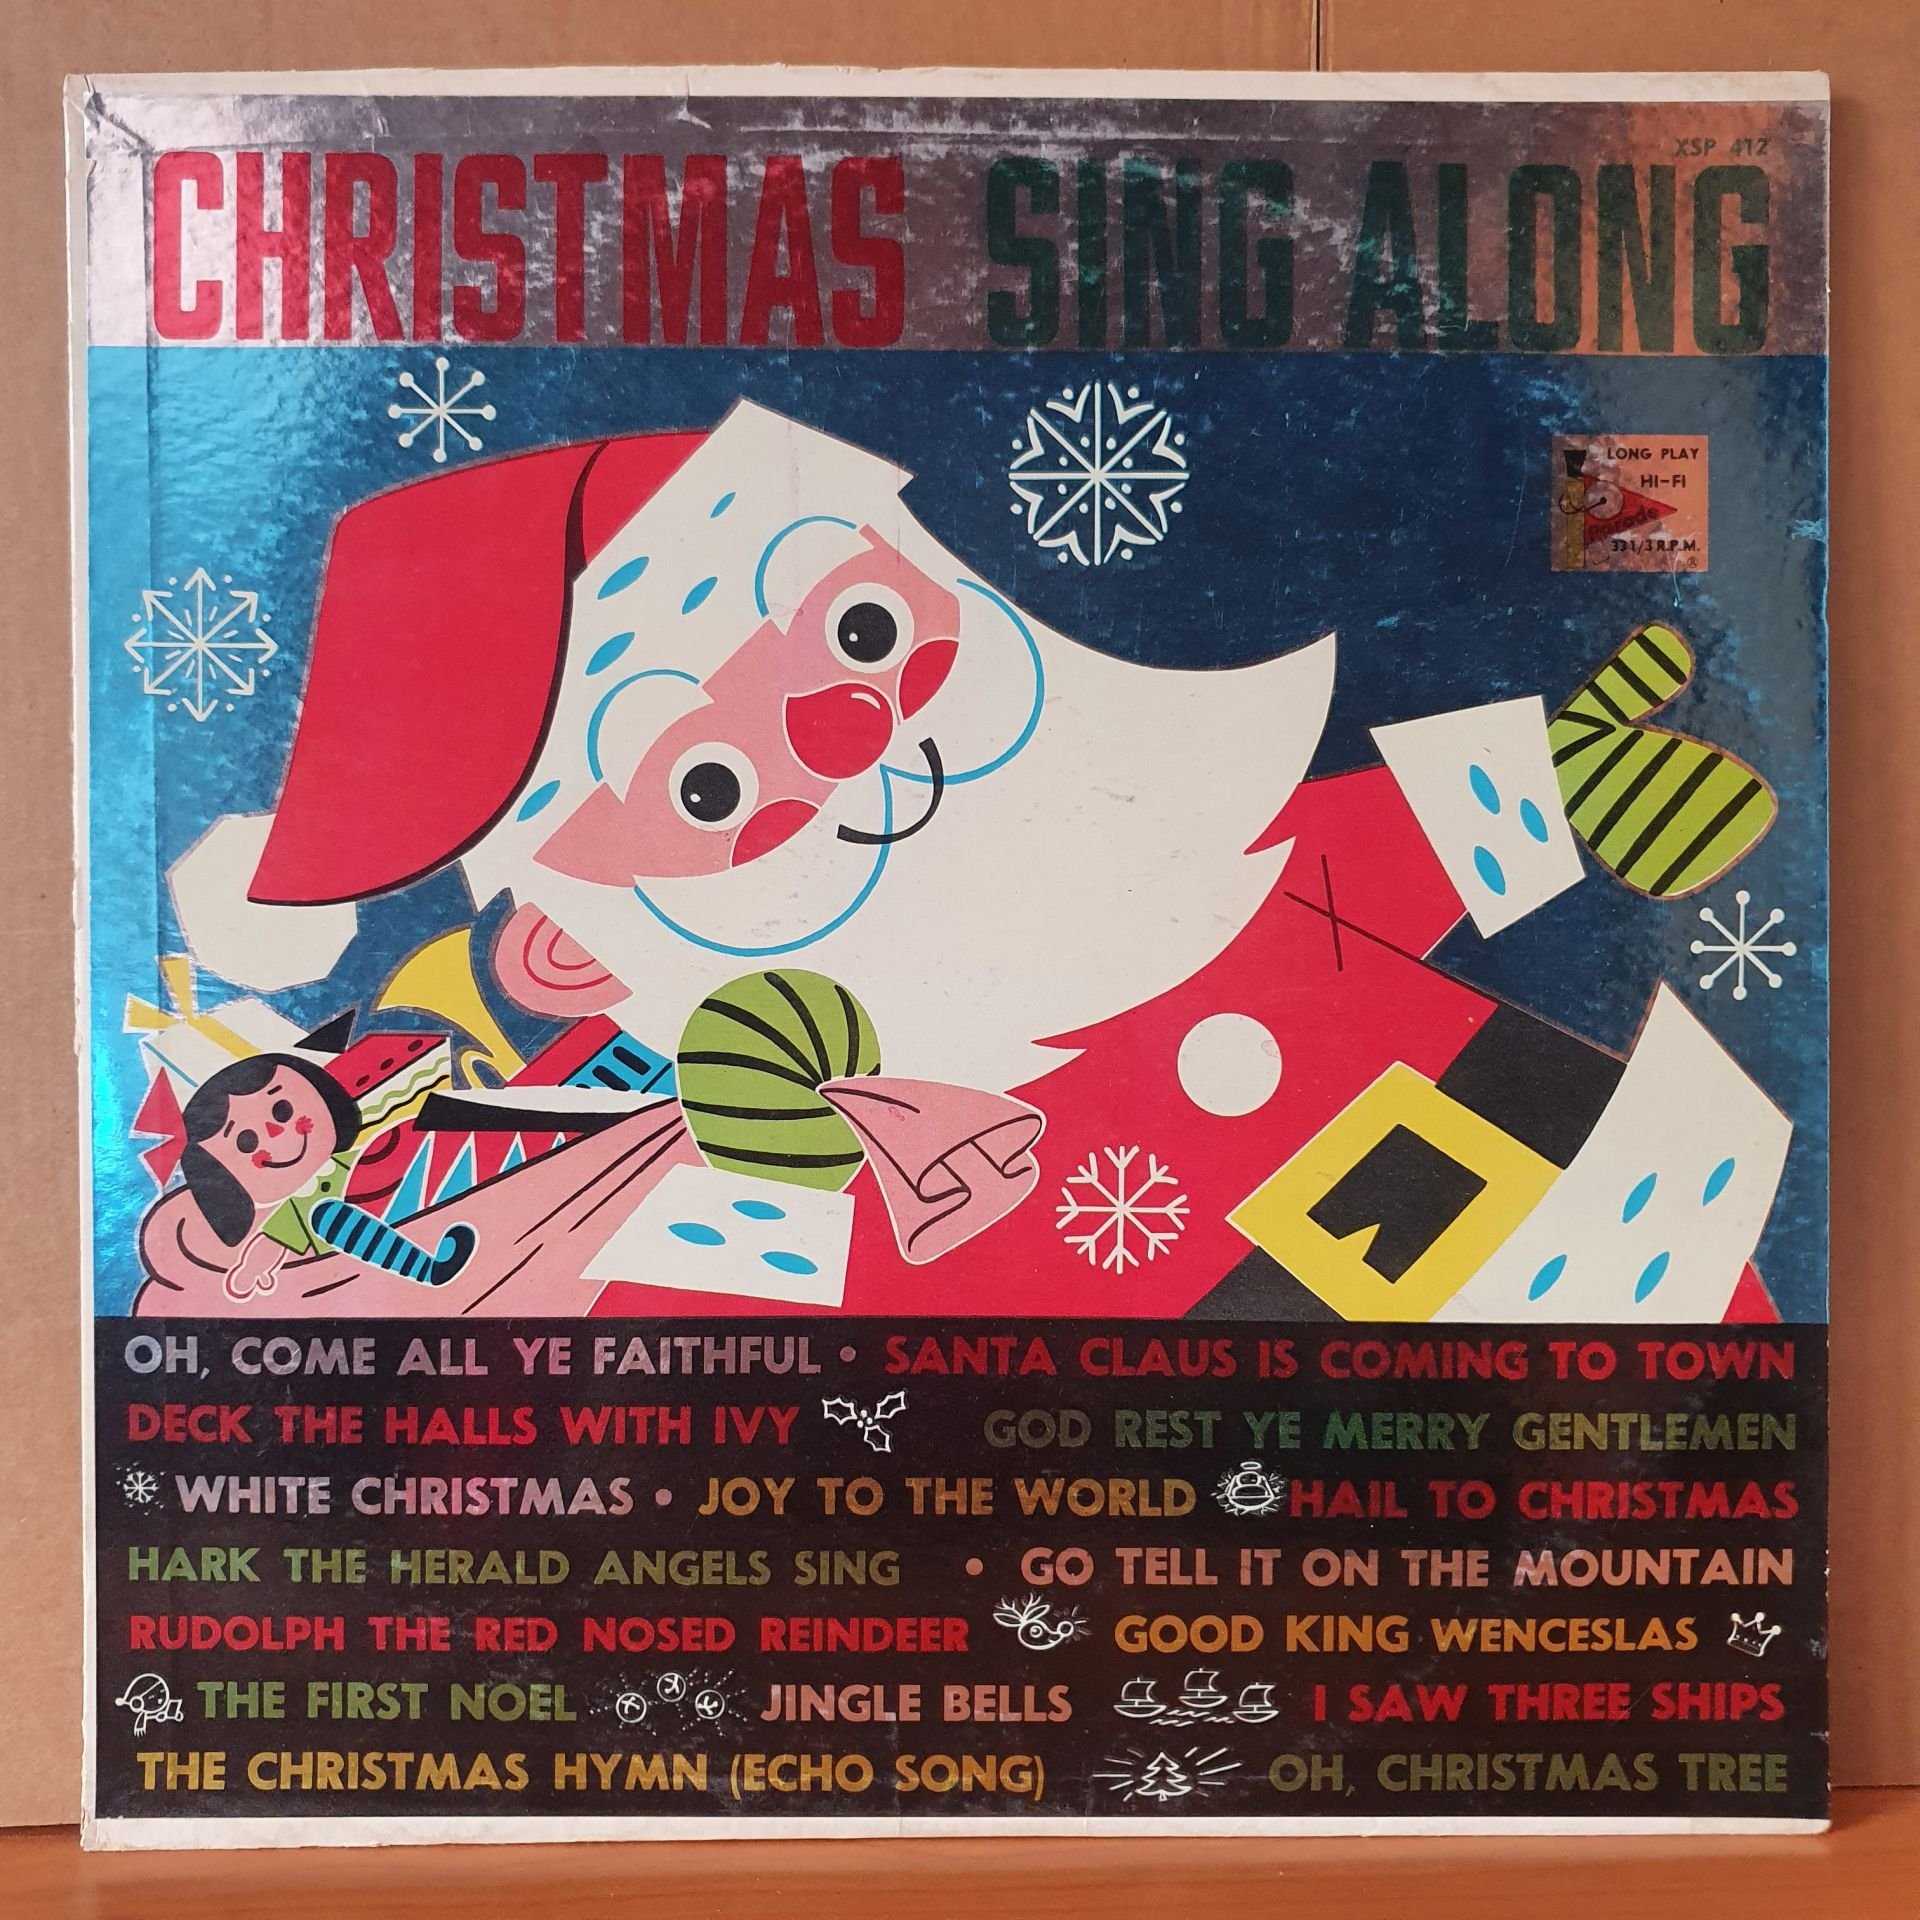 CHRISTMAS SING ALONG / PIROUETTE ORCHESTRA & CHORUS - LP 2.EL PLAK